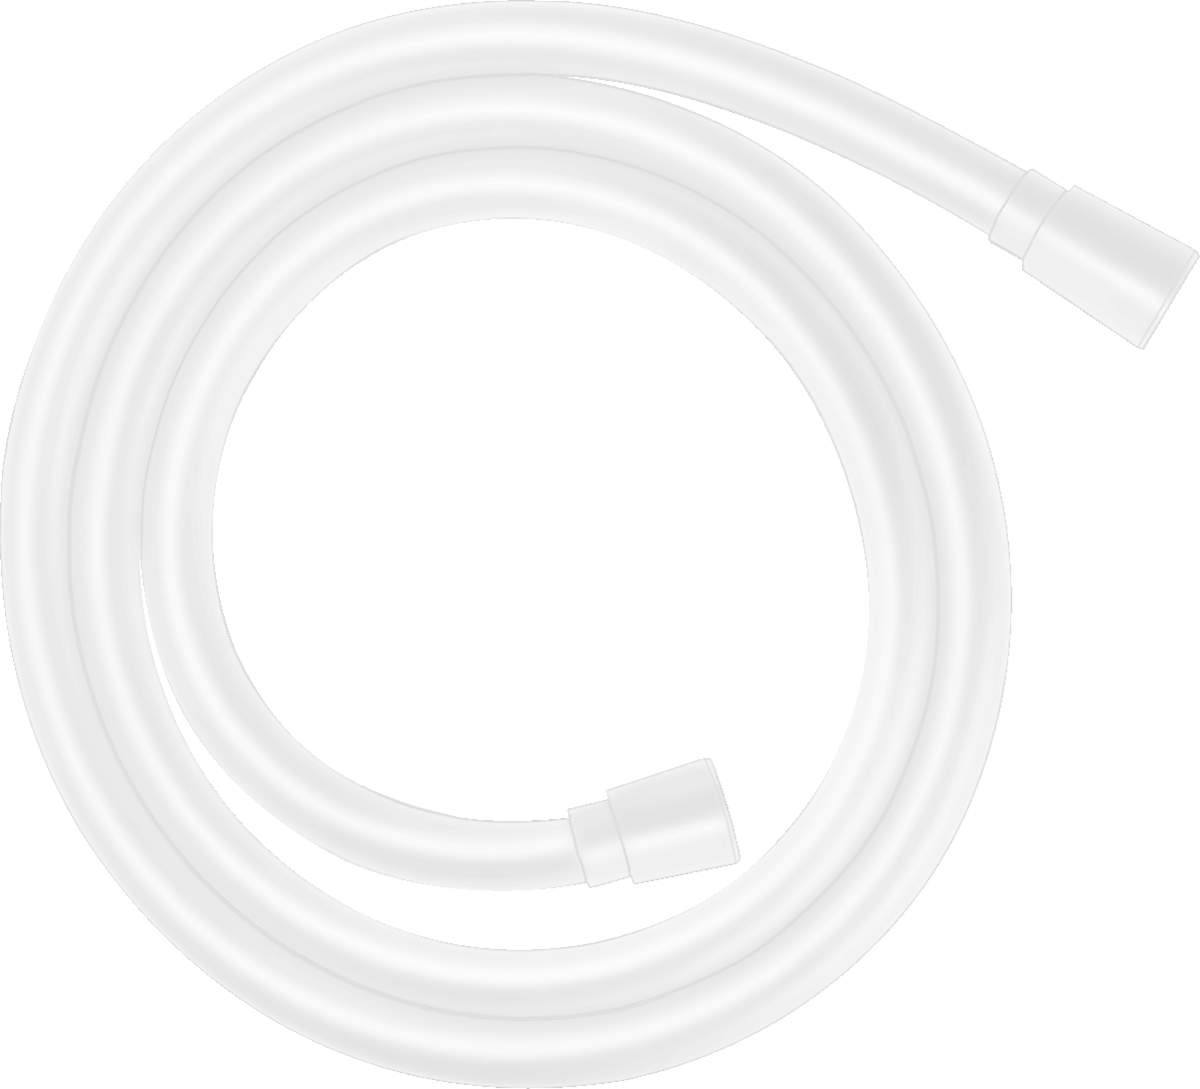 HANSGROHE Isiflex Duş hortumu 160 cm #28276700 - Satin Beyaz resmi